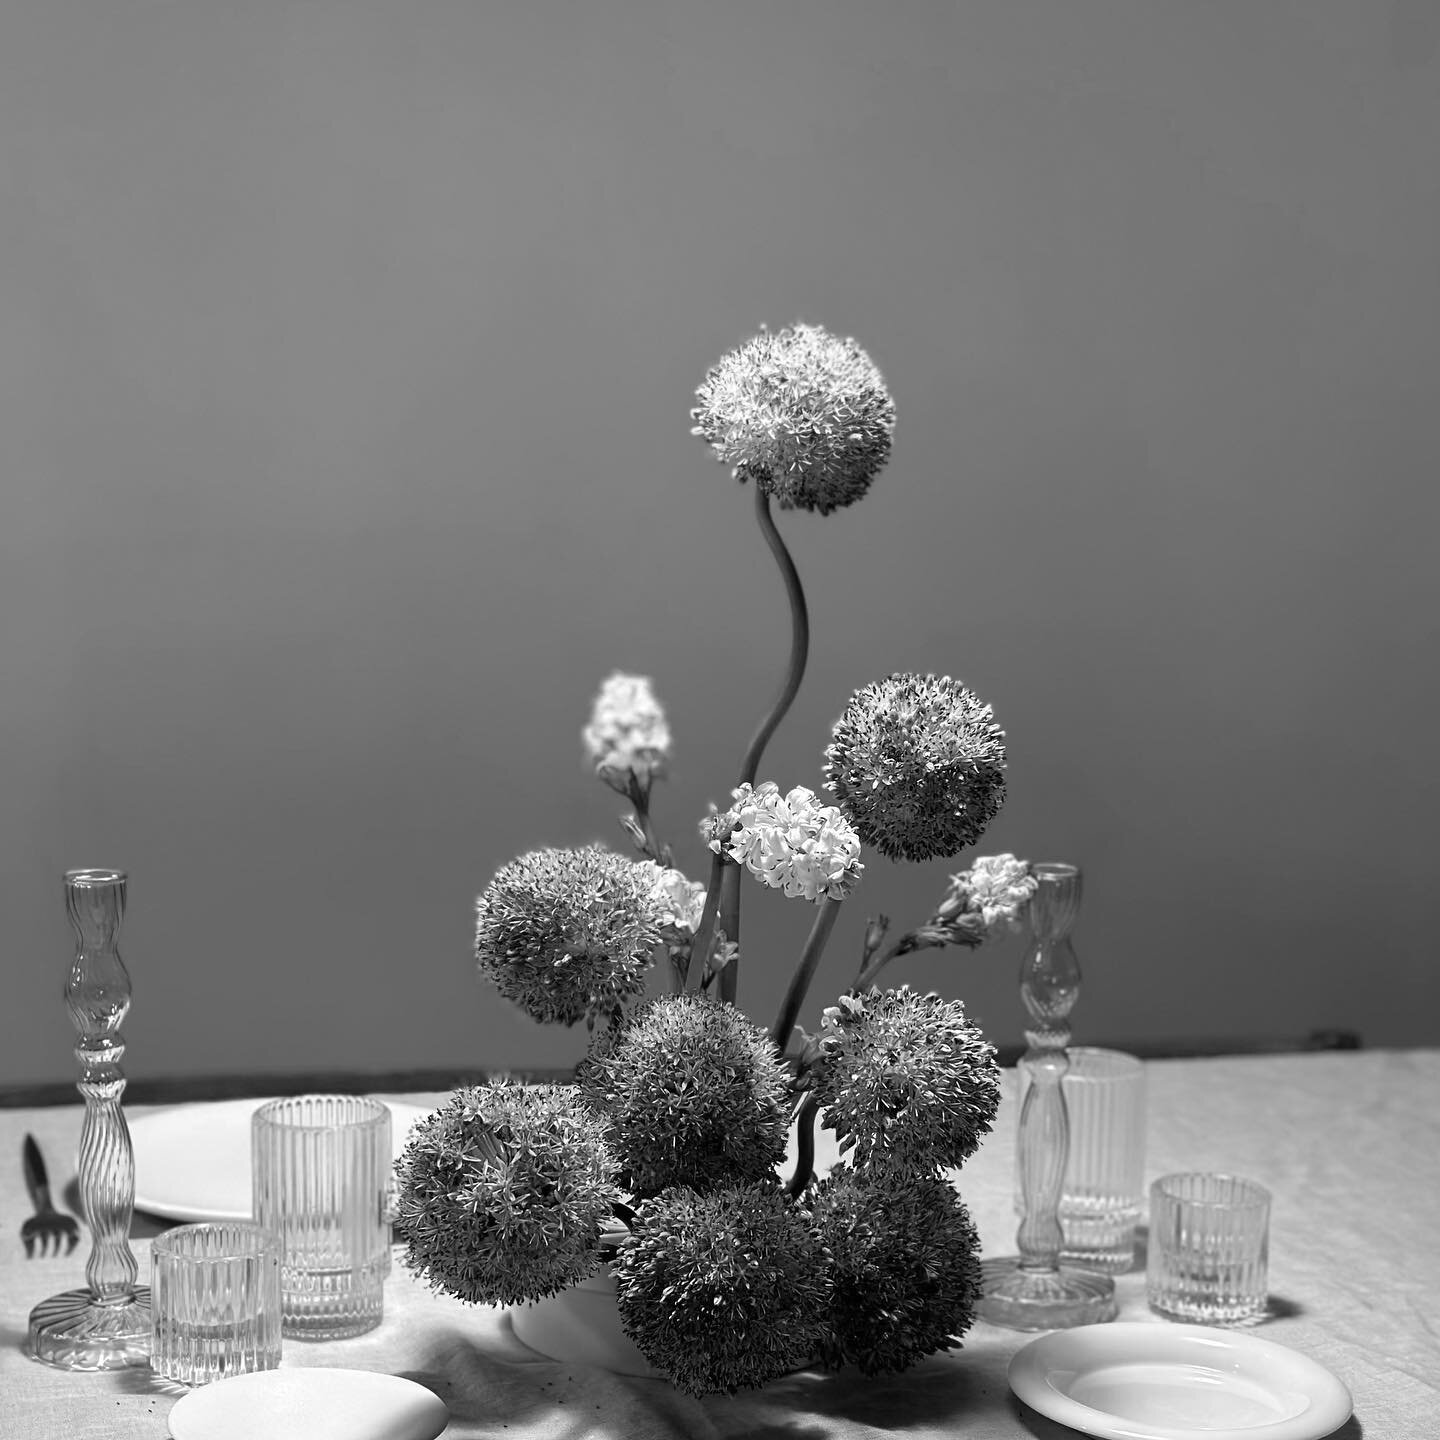 Complete the dining table with blooms💕
.
#allium #centerpiece #dinnerarrangement #frogarrangement #floral
#njflower #nyflower